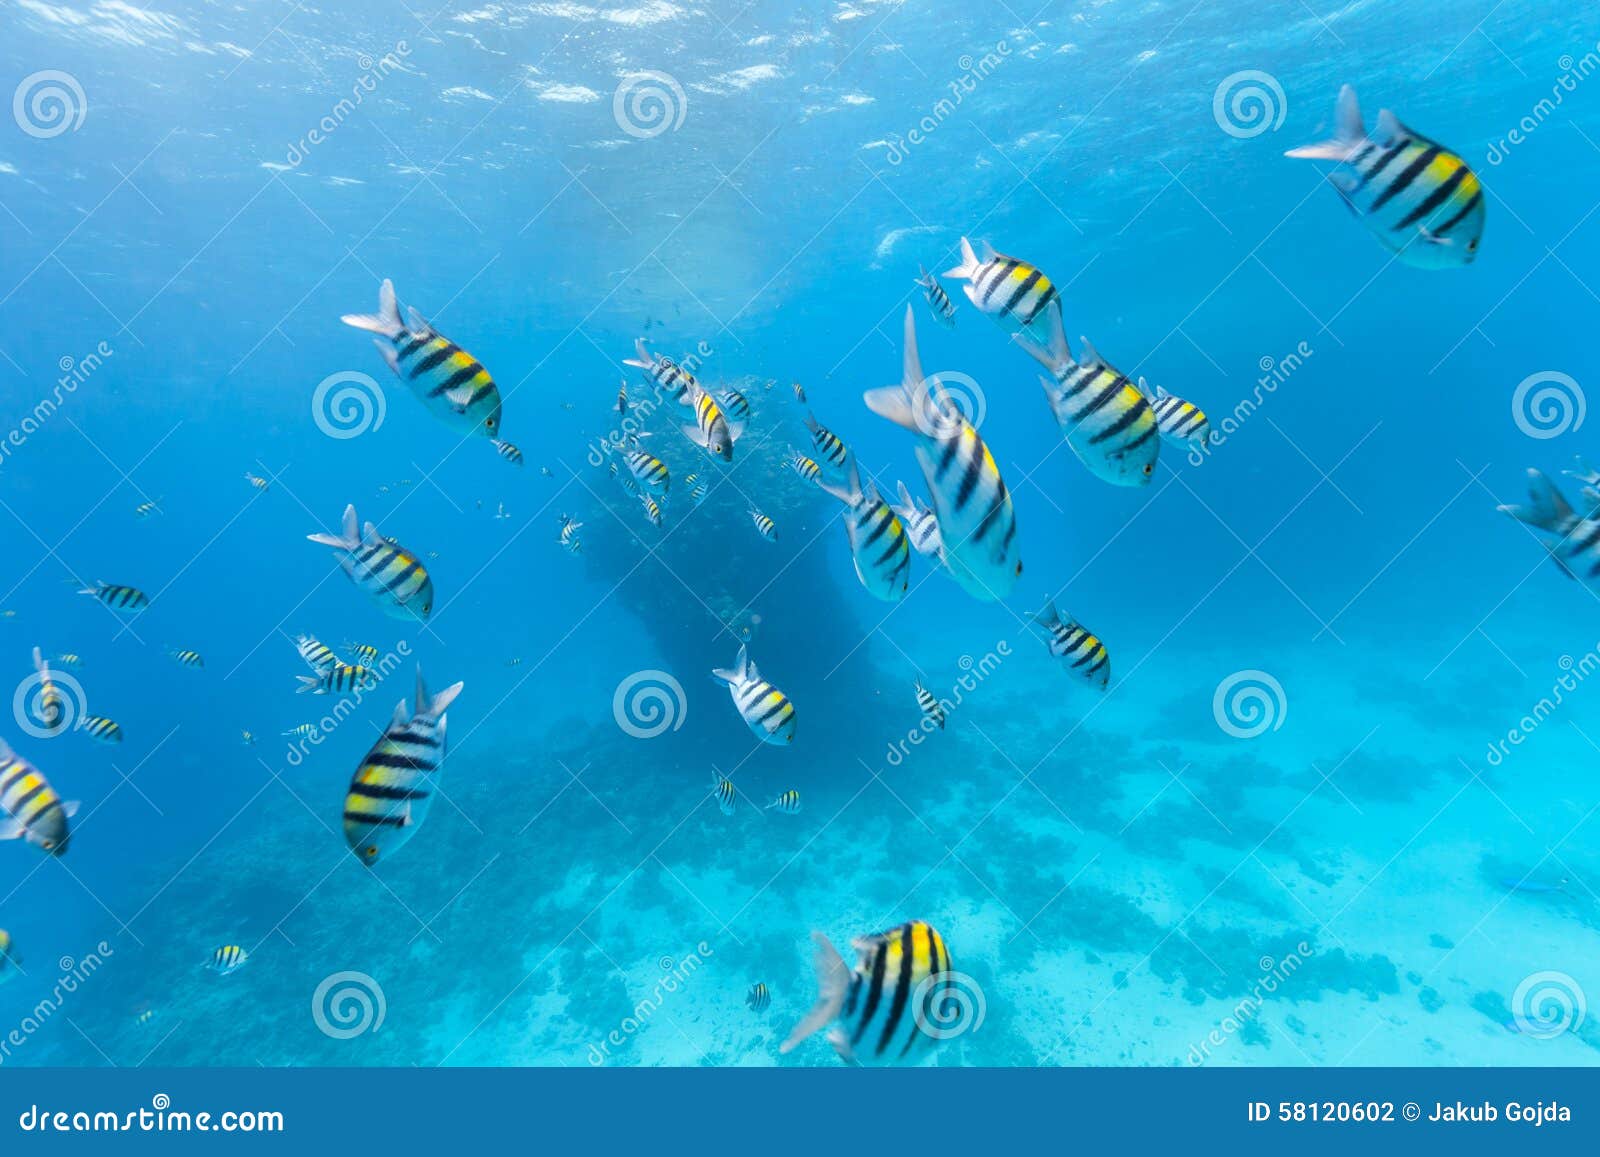 Underwater flock of fish stock photo. Image of underwater - 58120602